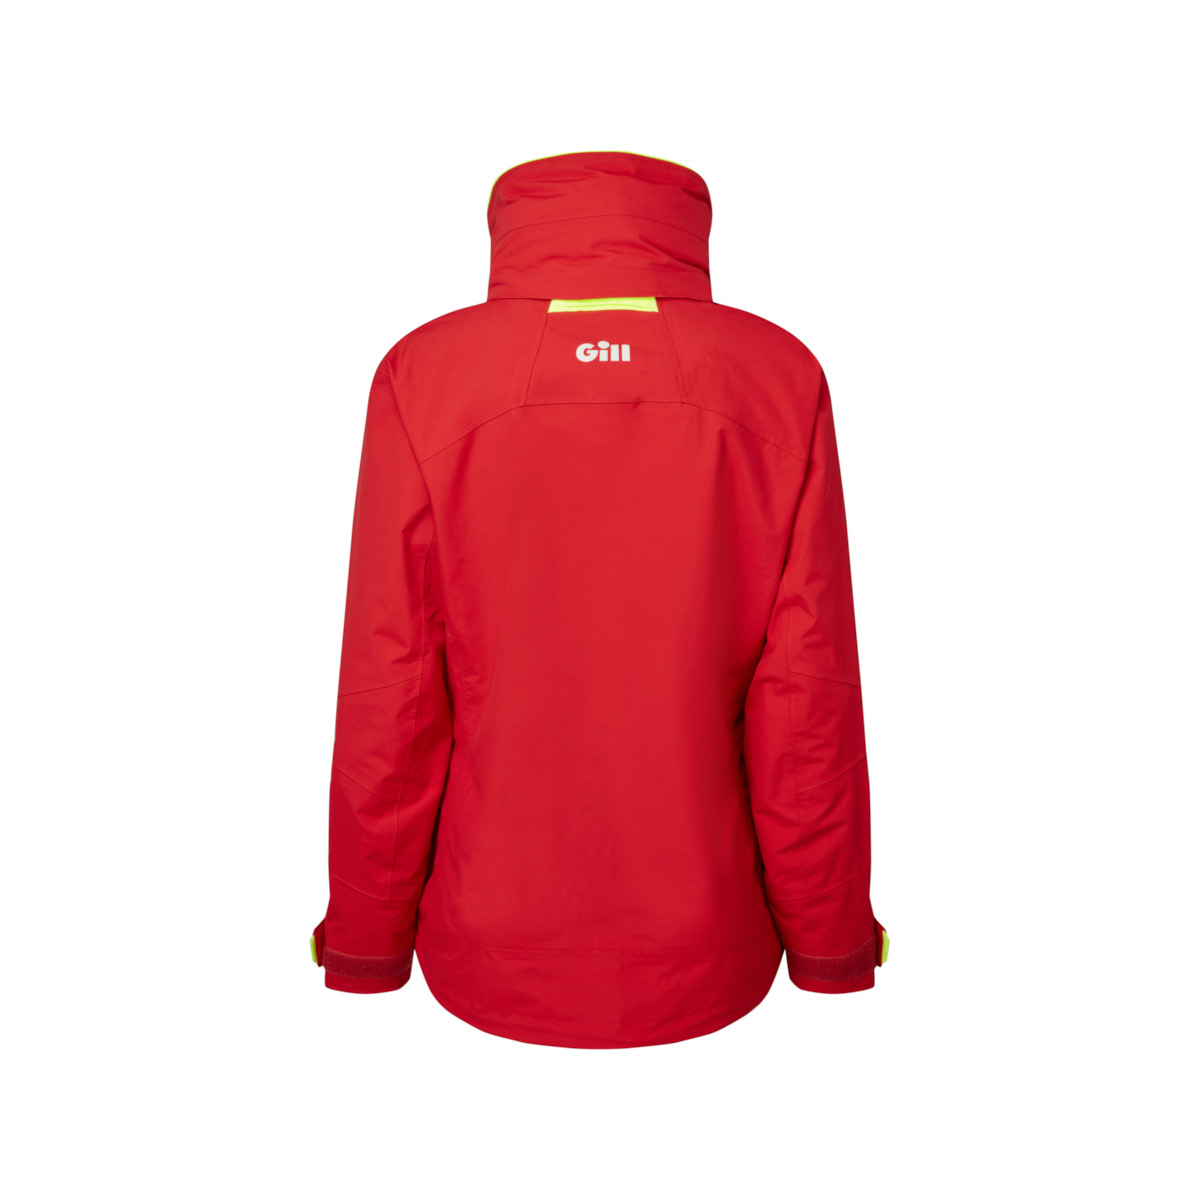 Gill OS32 veste de voile femme Coastal rouge, taille 16